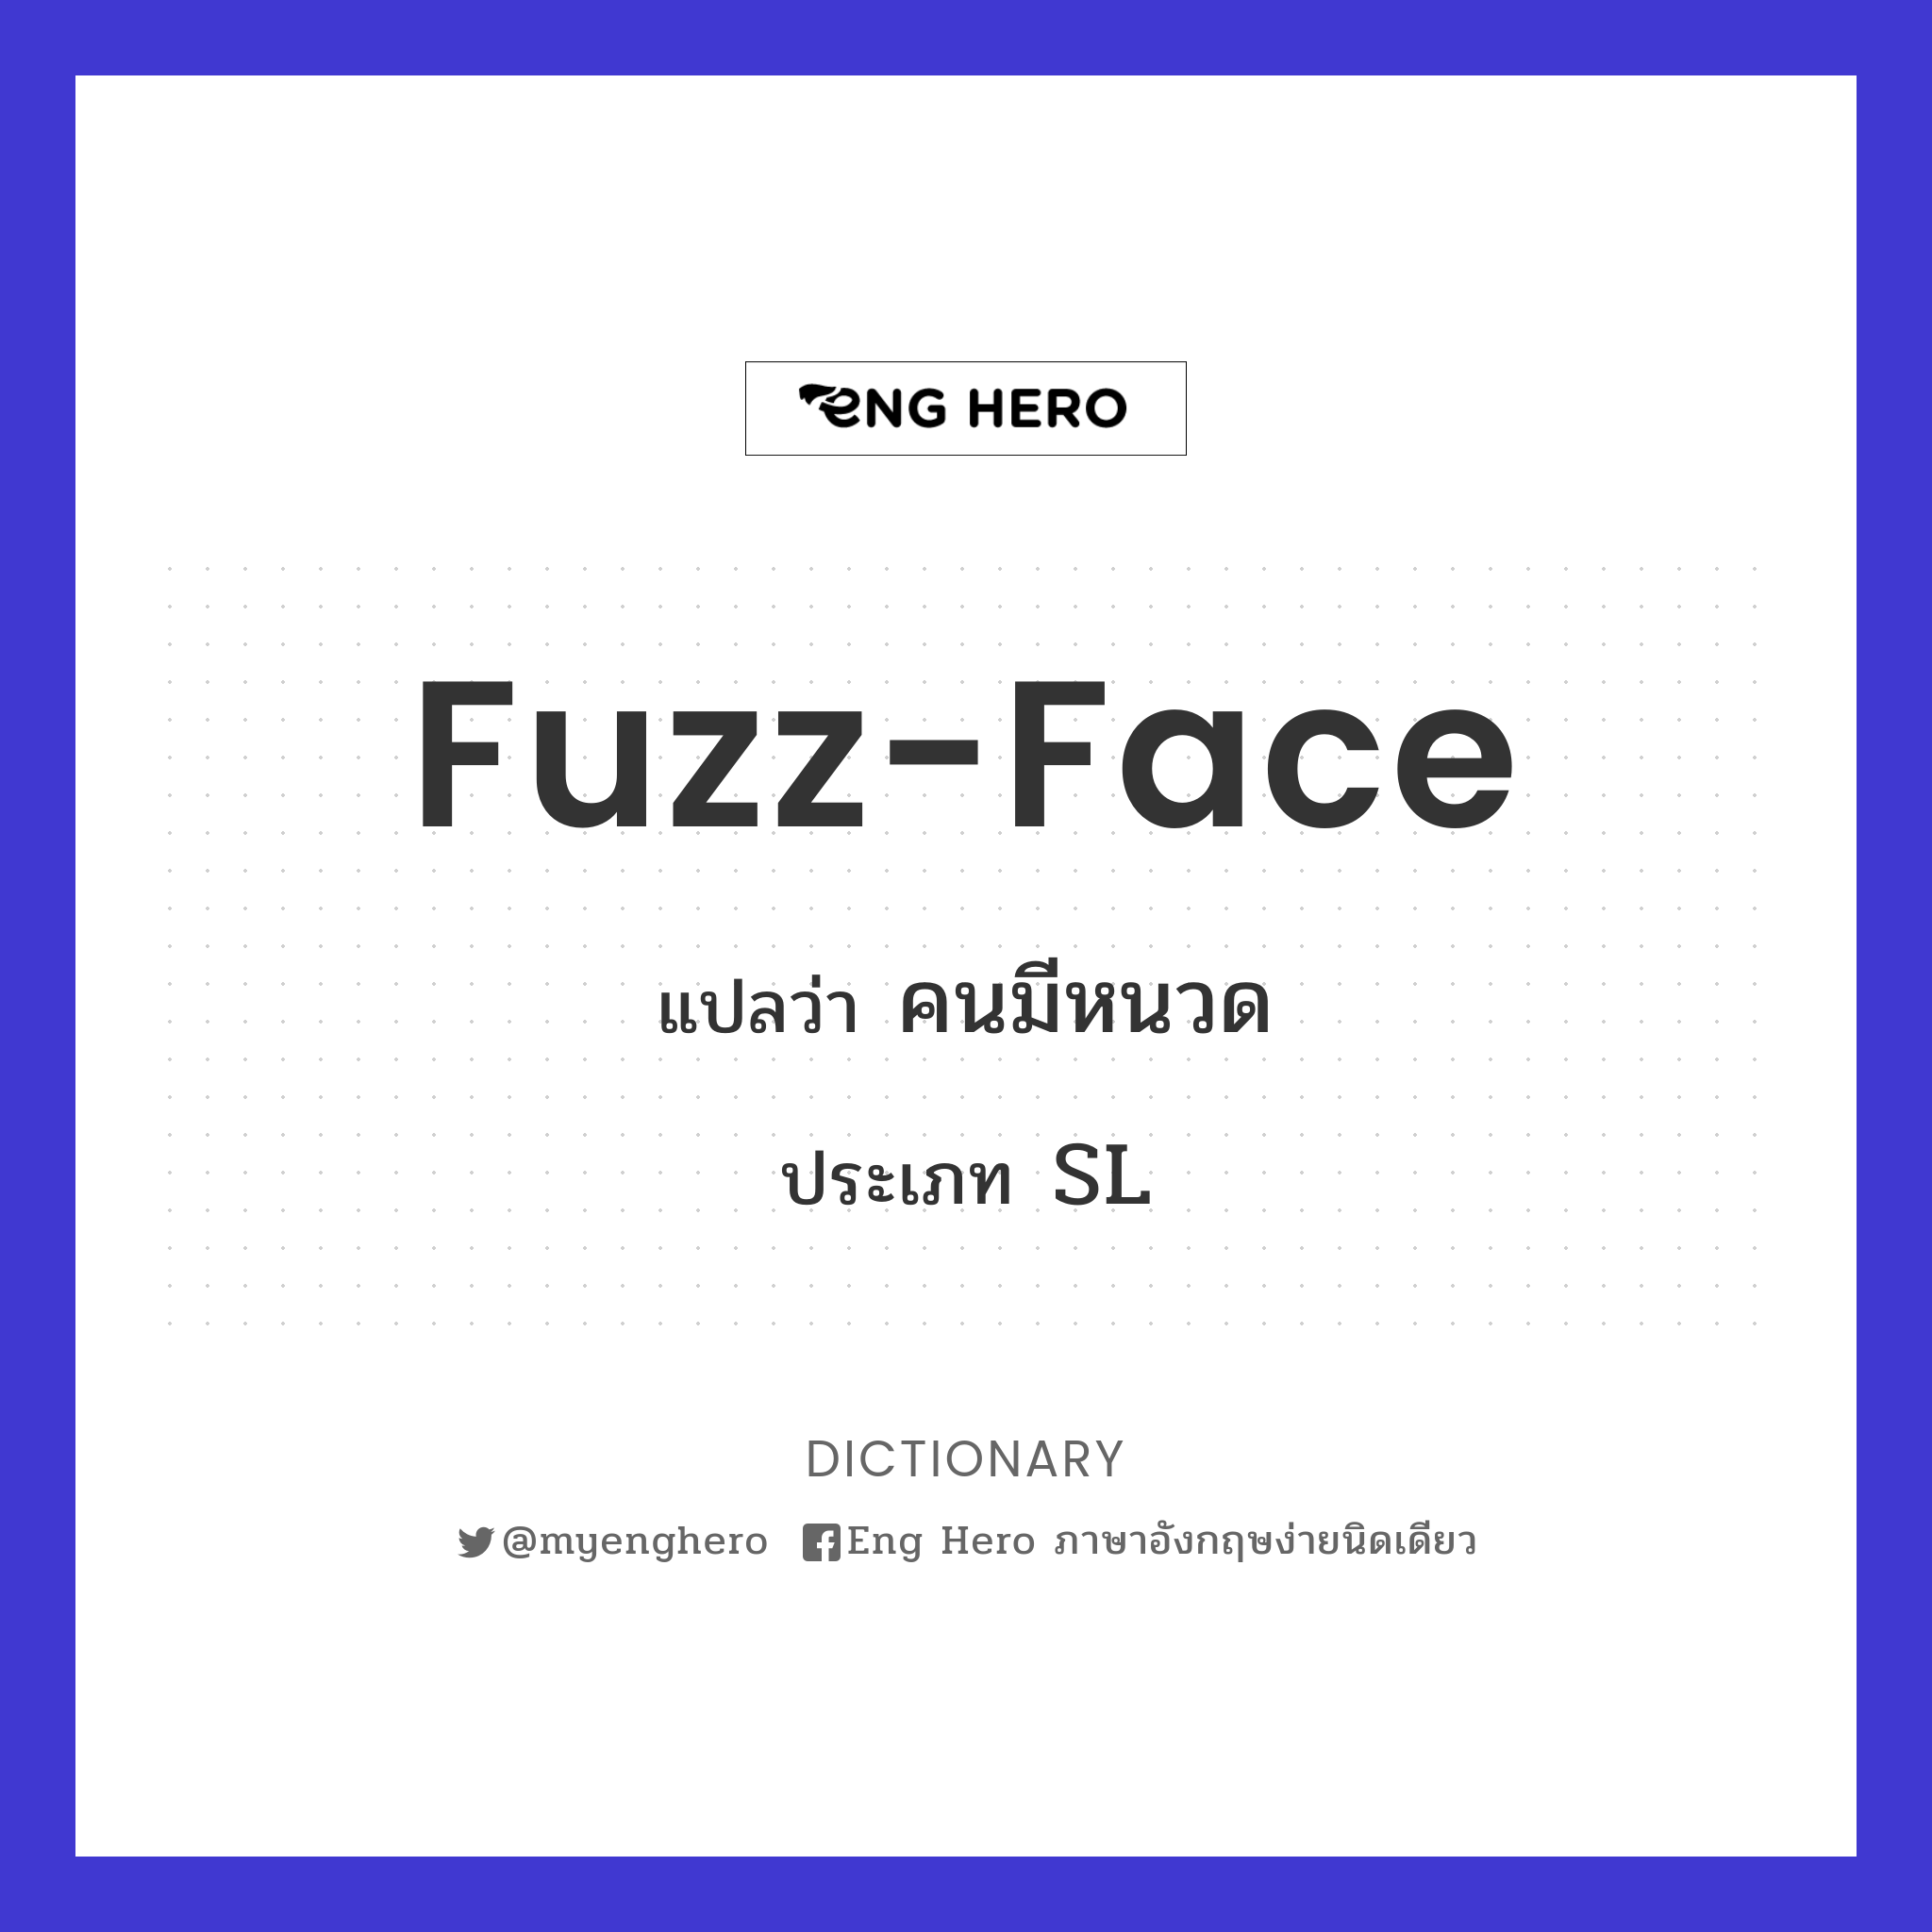 fuzz-face